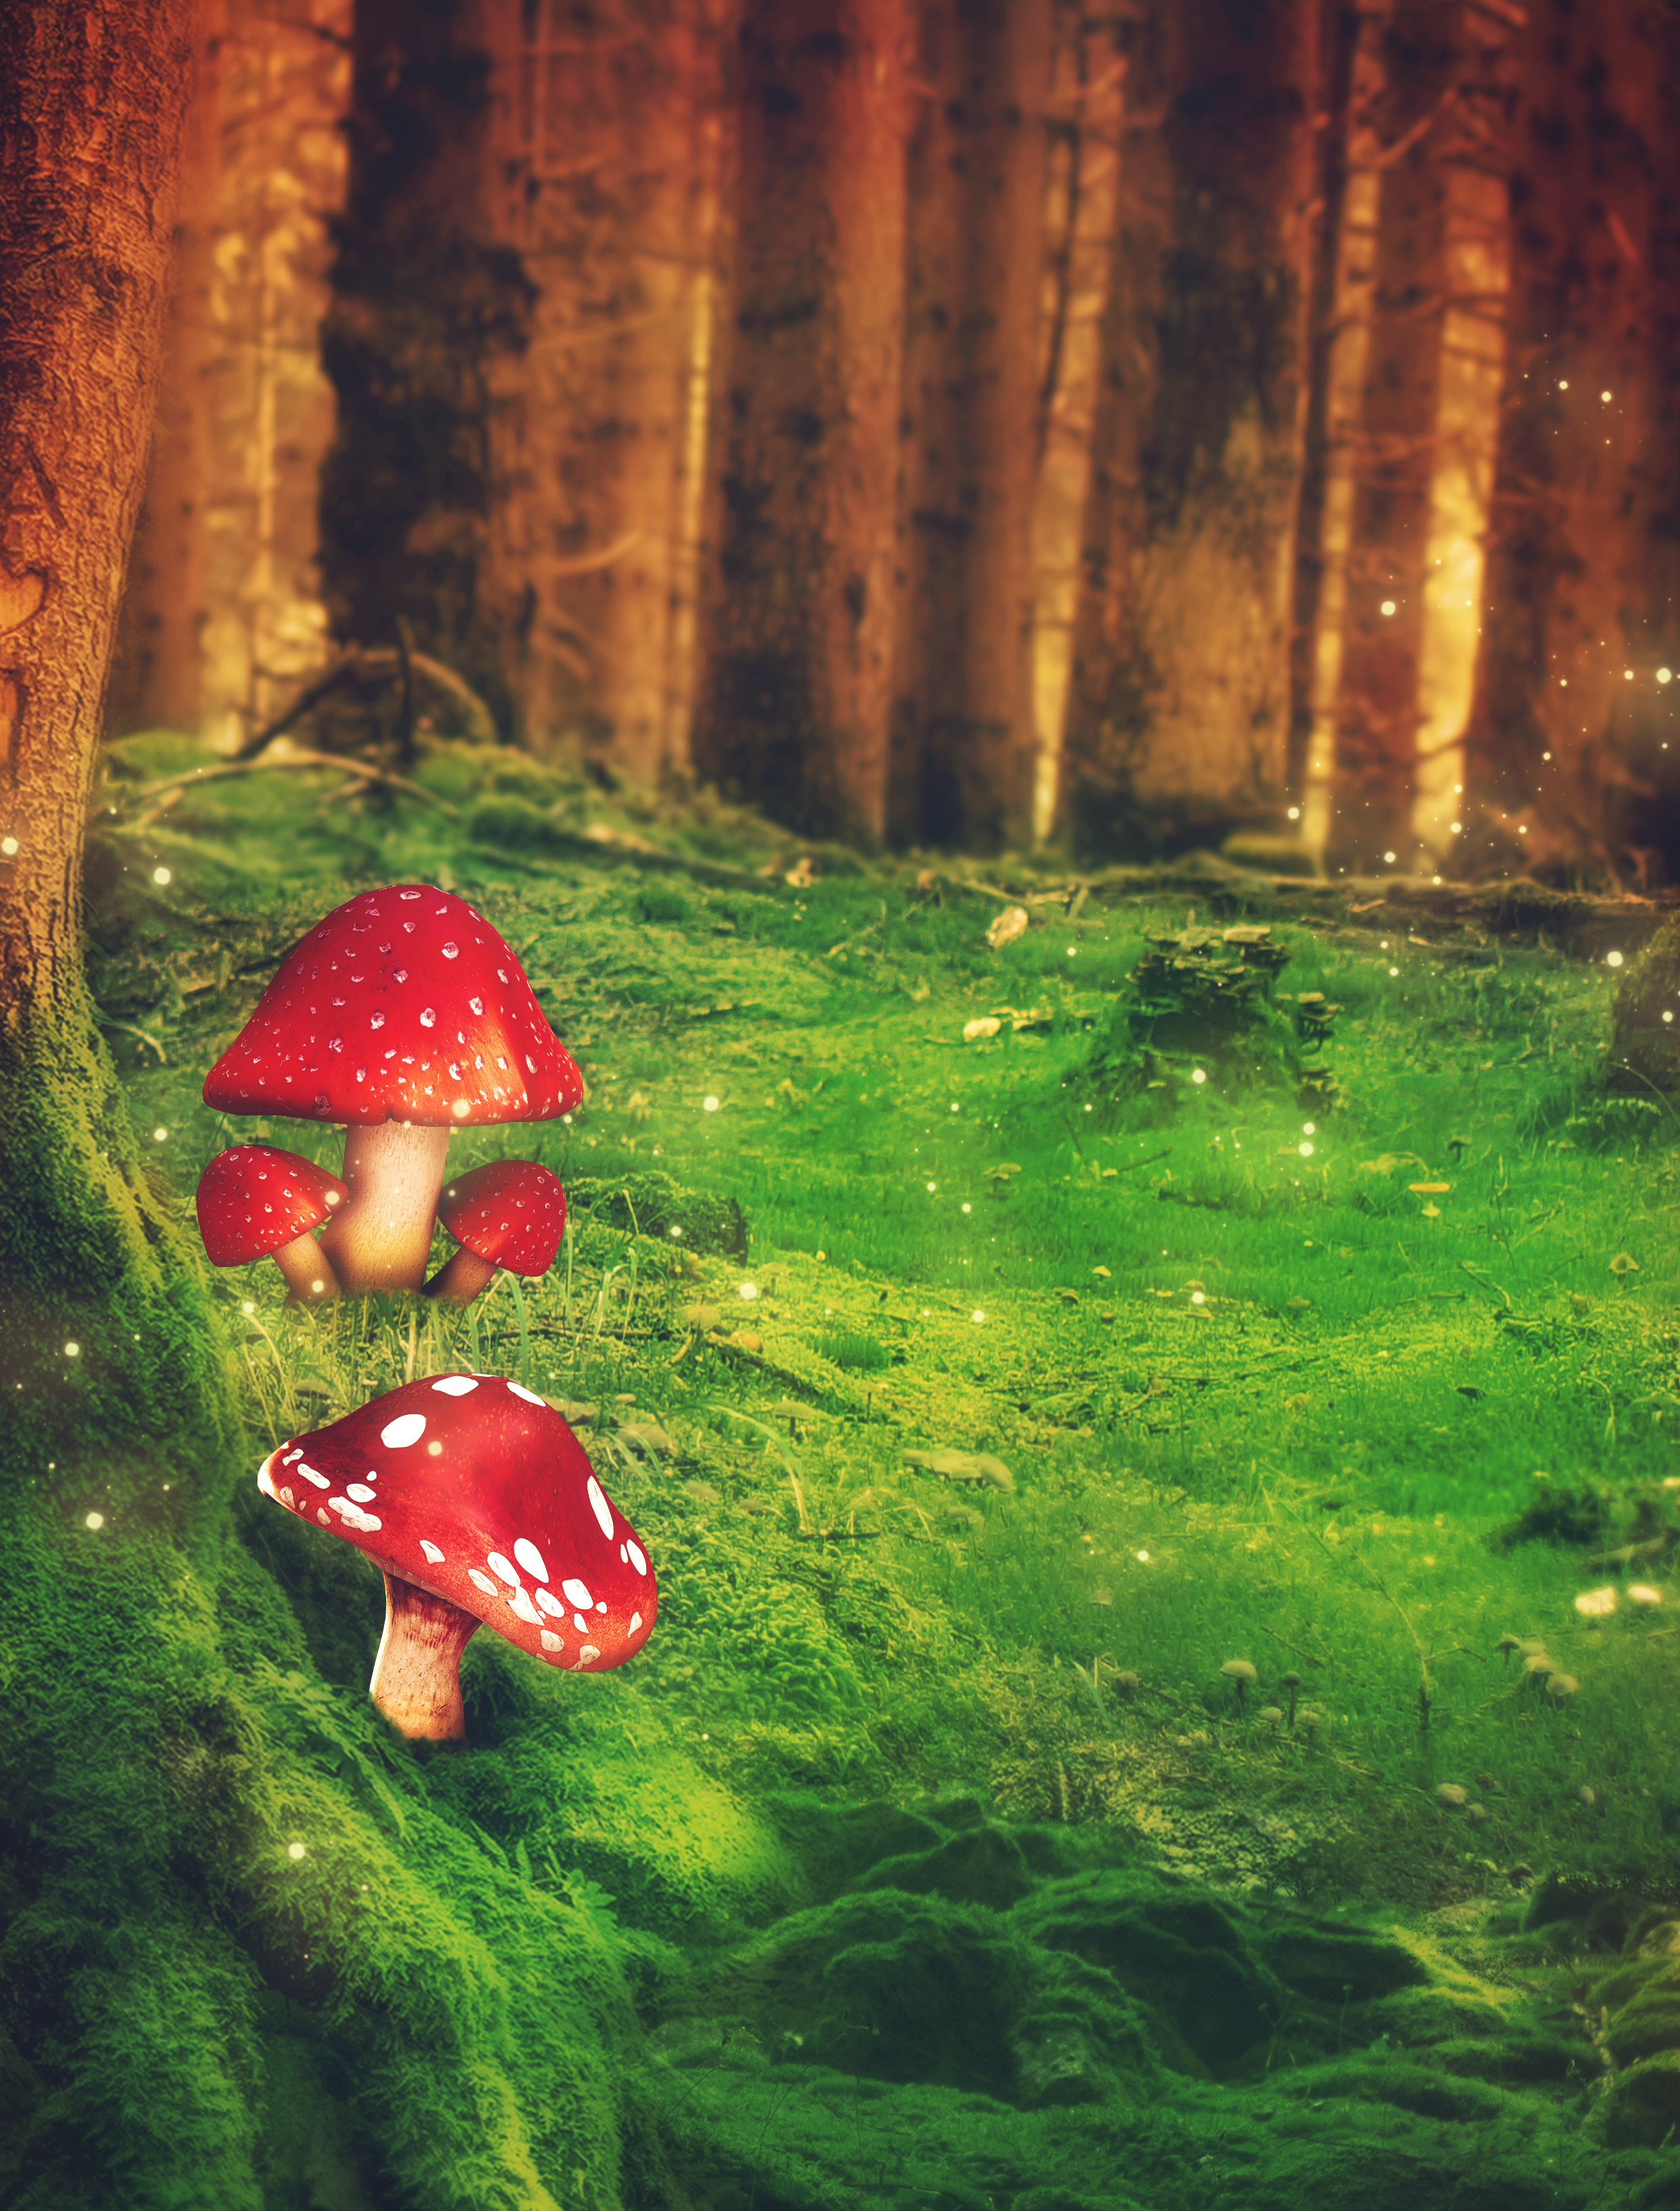 fairy tale background 03 - fantasy premade stock by Darkmoon-Art-de on  DeviantArt